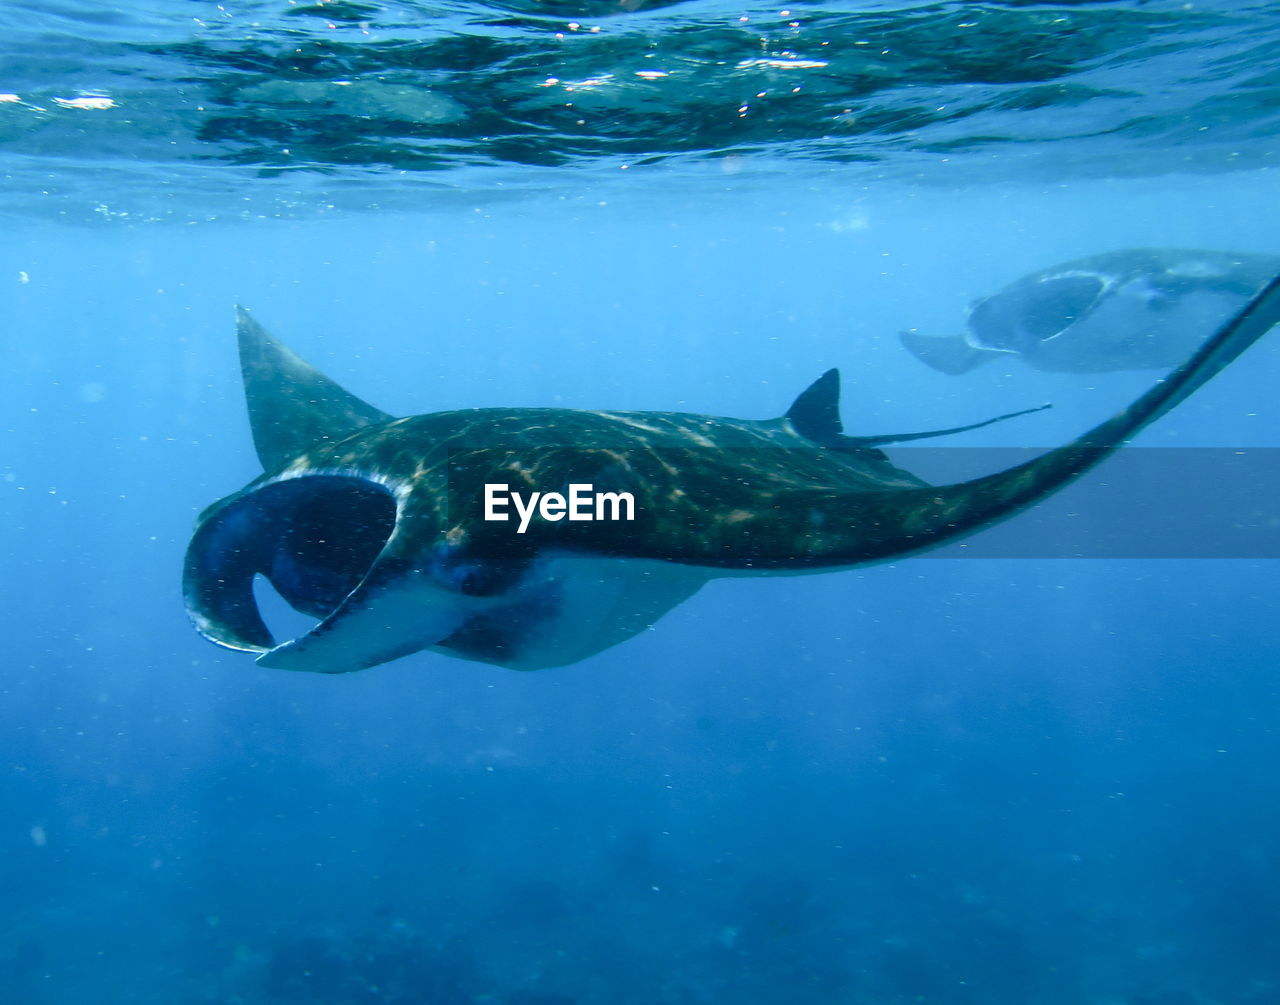 Manta ray swimming in sea